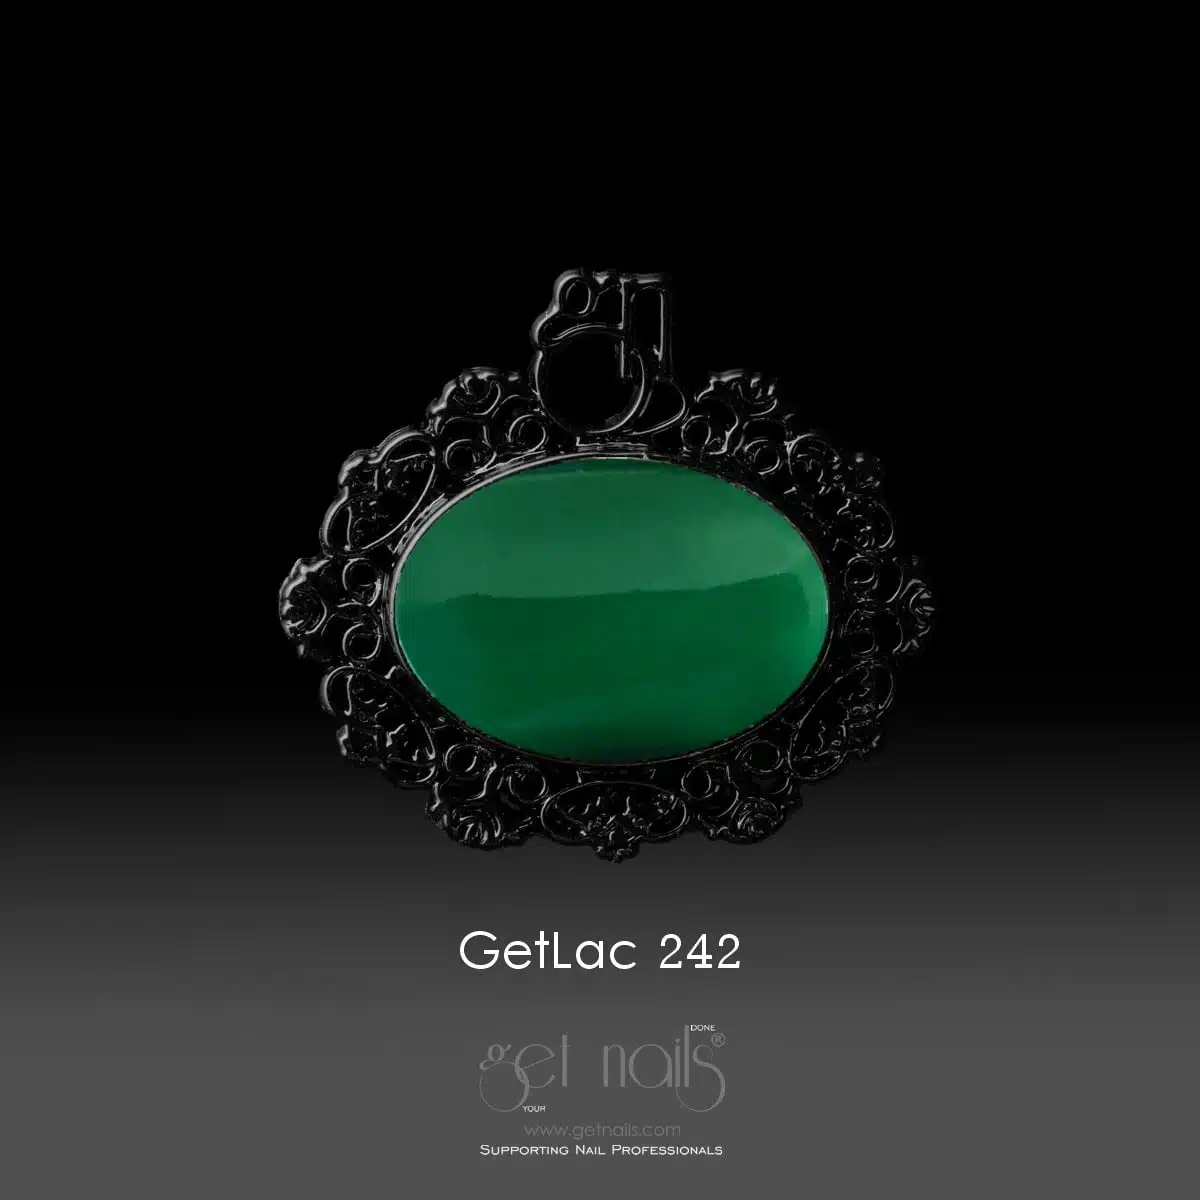 Get Nails Austria - GetLac 242 Green 15g